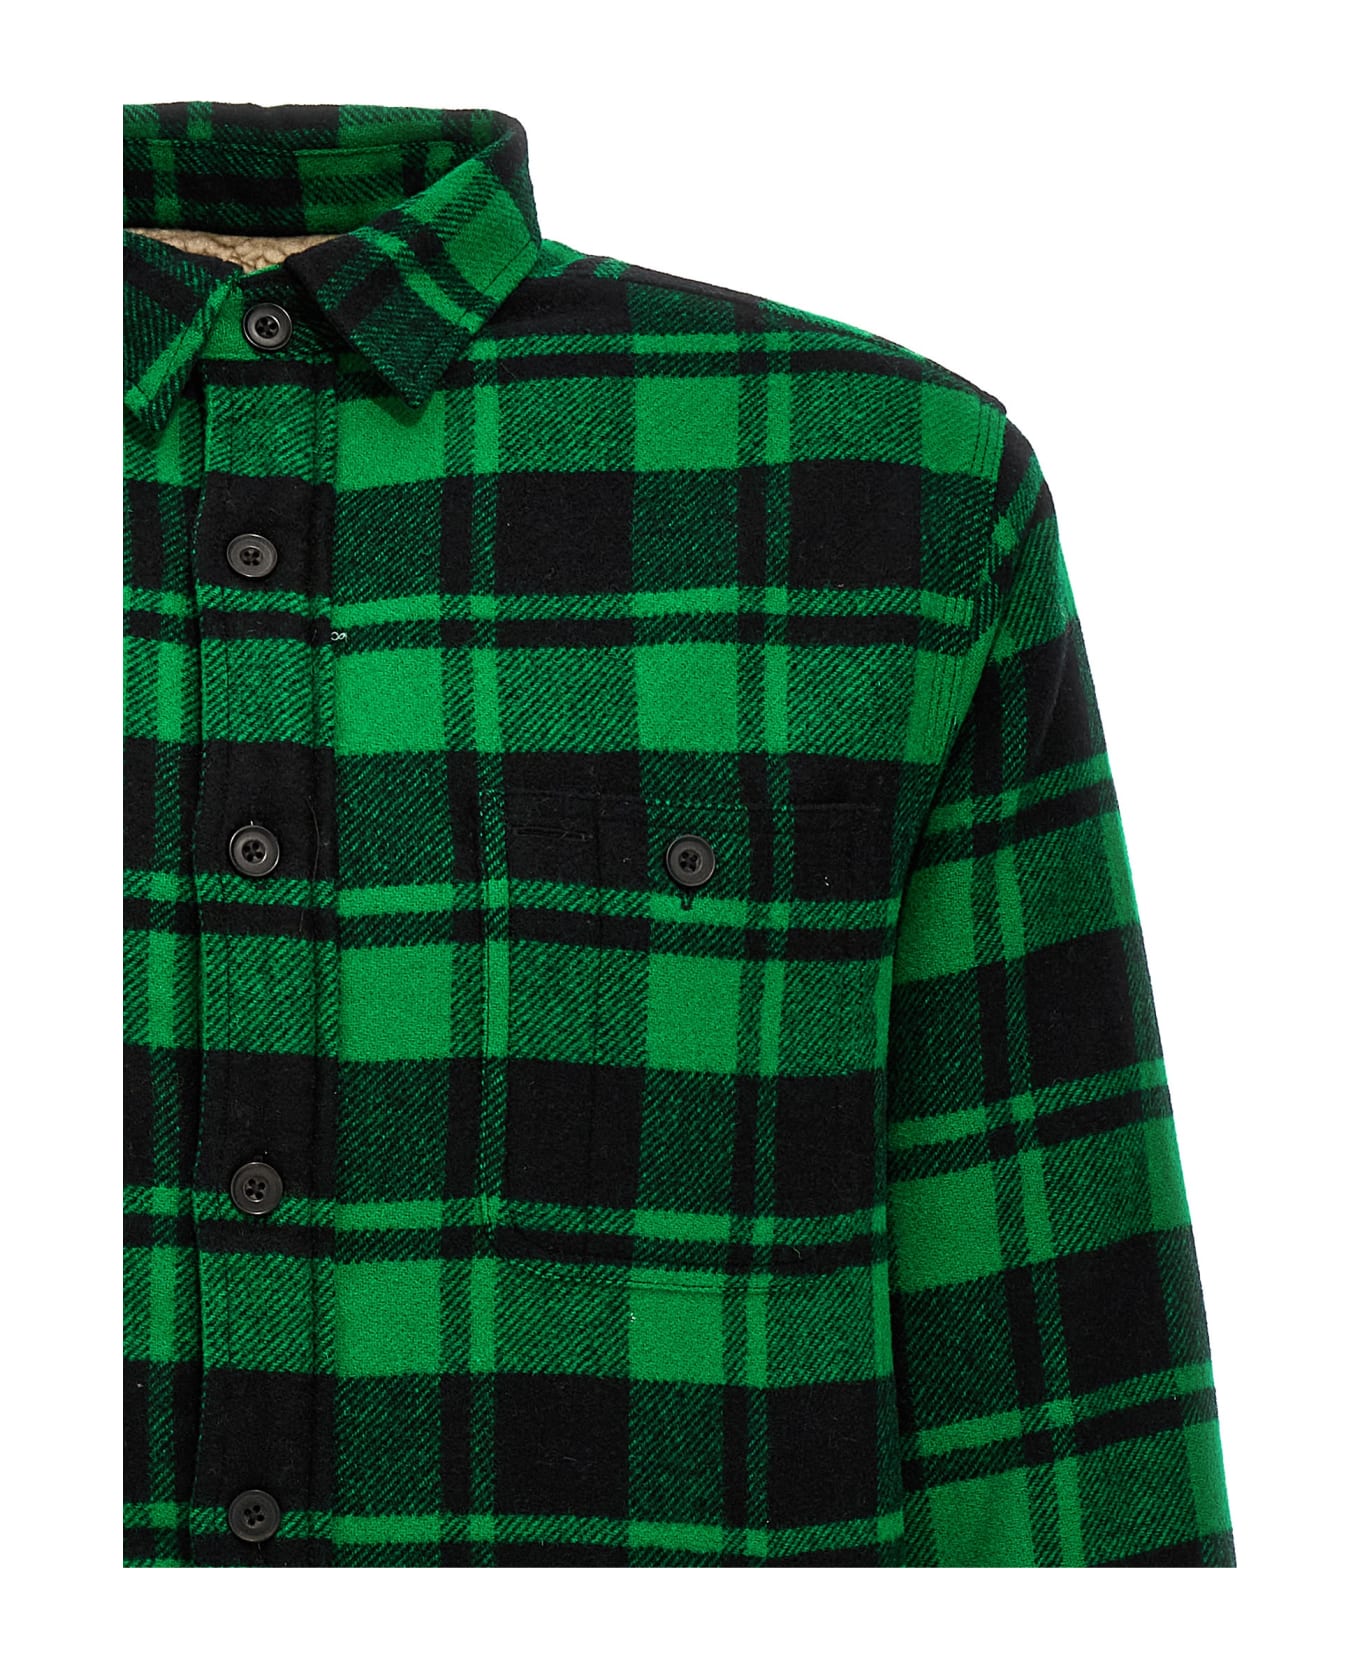 Polo Ralph Lauren Check Jacket - Green ジャケット